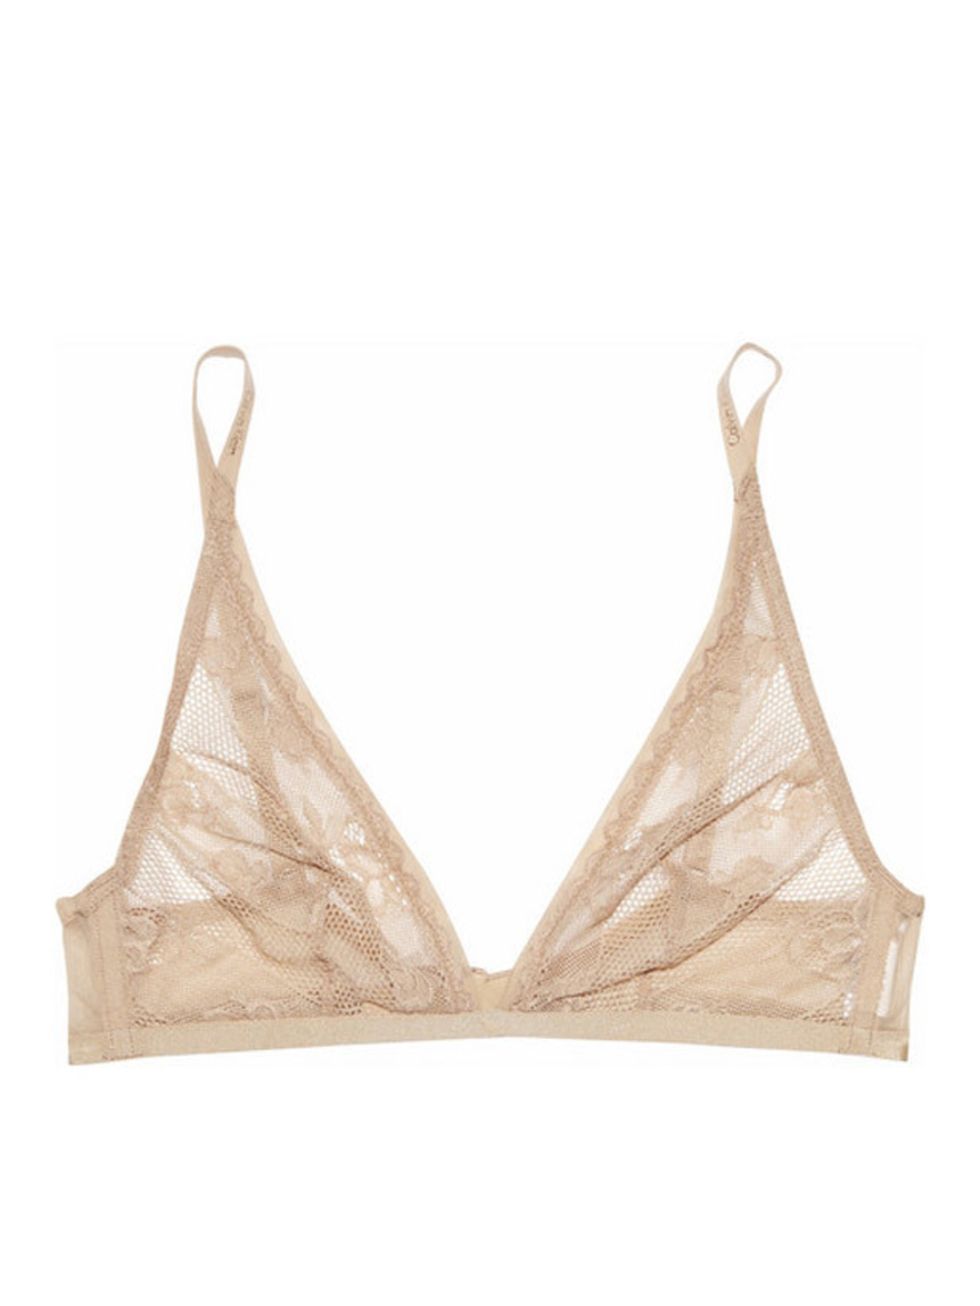 <p>Calvin Klein Underwear nude lace bra, £34, at <a href="http://www.net-a-porter.com/product/187715">Net-a-Porter</a></p>